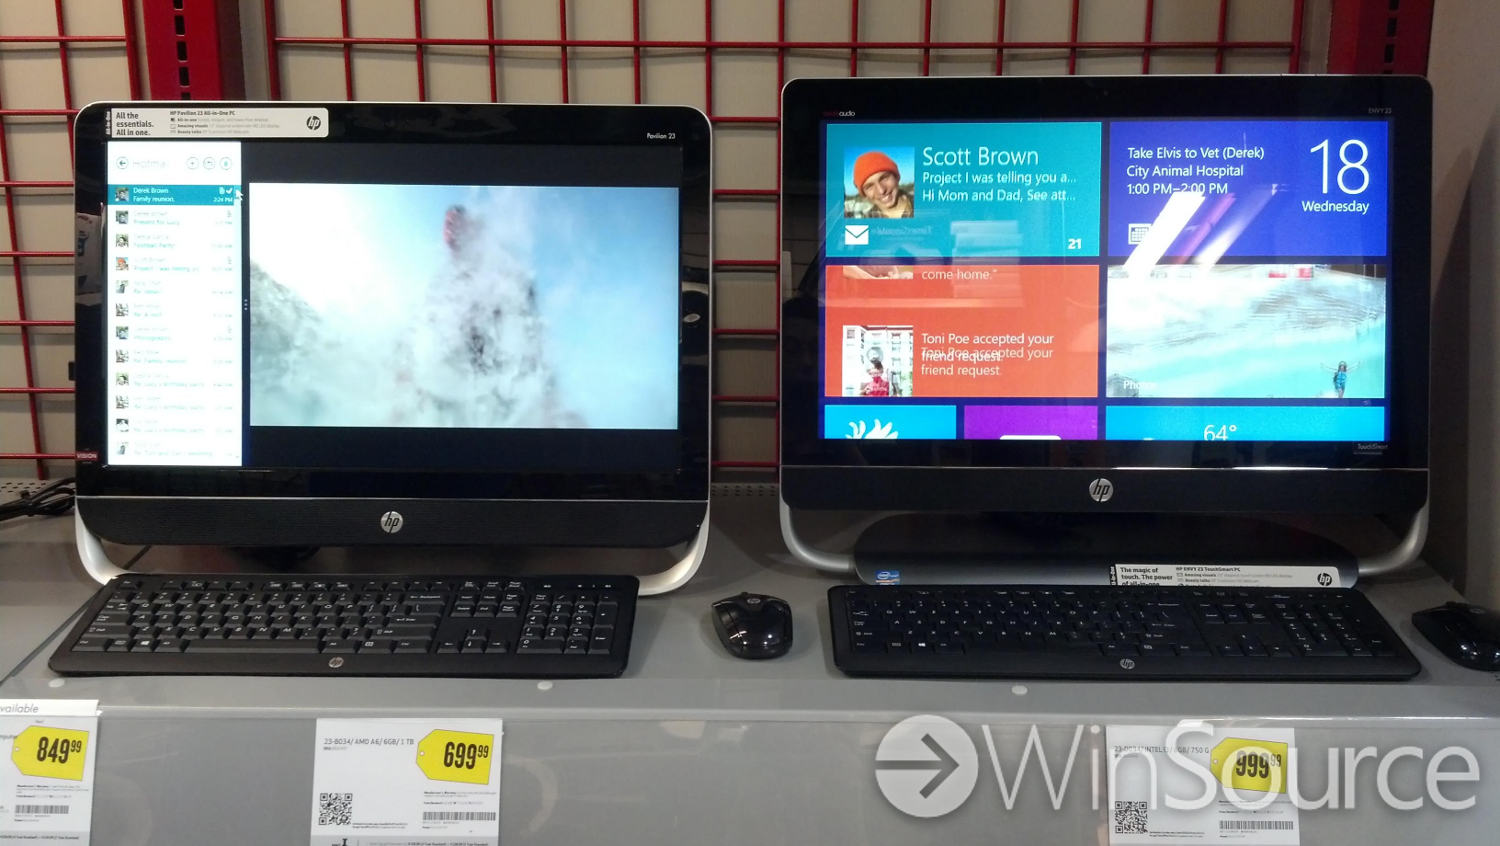 Windows 8 Hp Pcs Pop Up At Best Buy Stores Slashgear